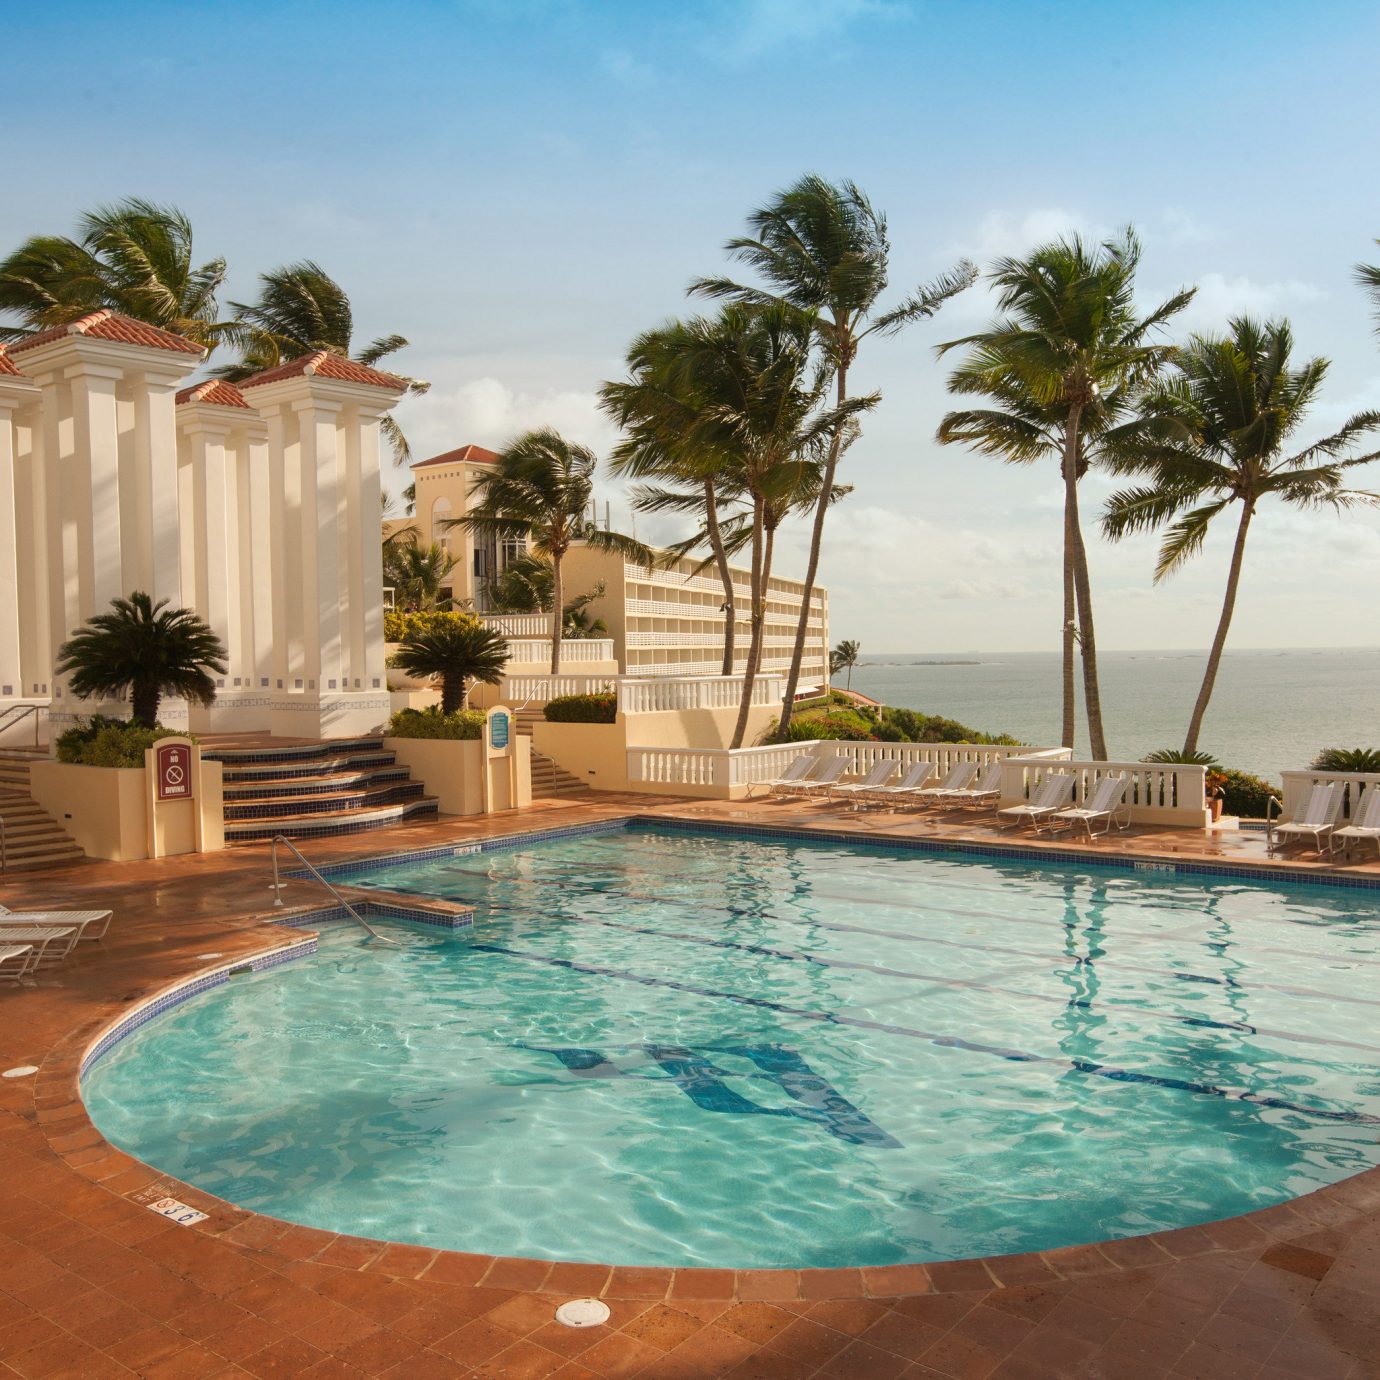 Hotels sky swimming pool Resort property Pool Villa caribbean backyard hacienda Lagoon palm swimming